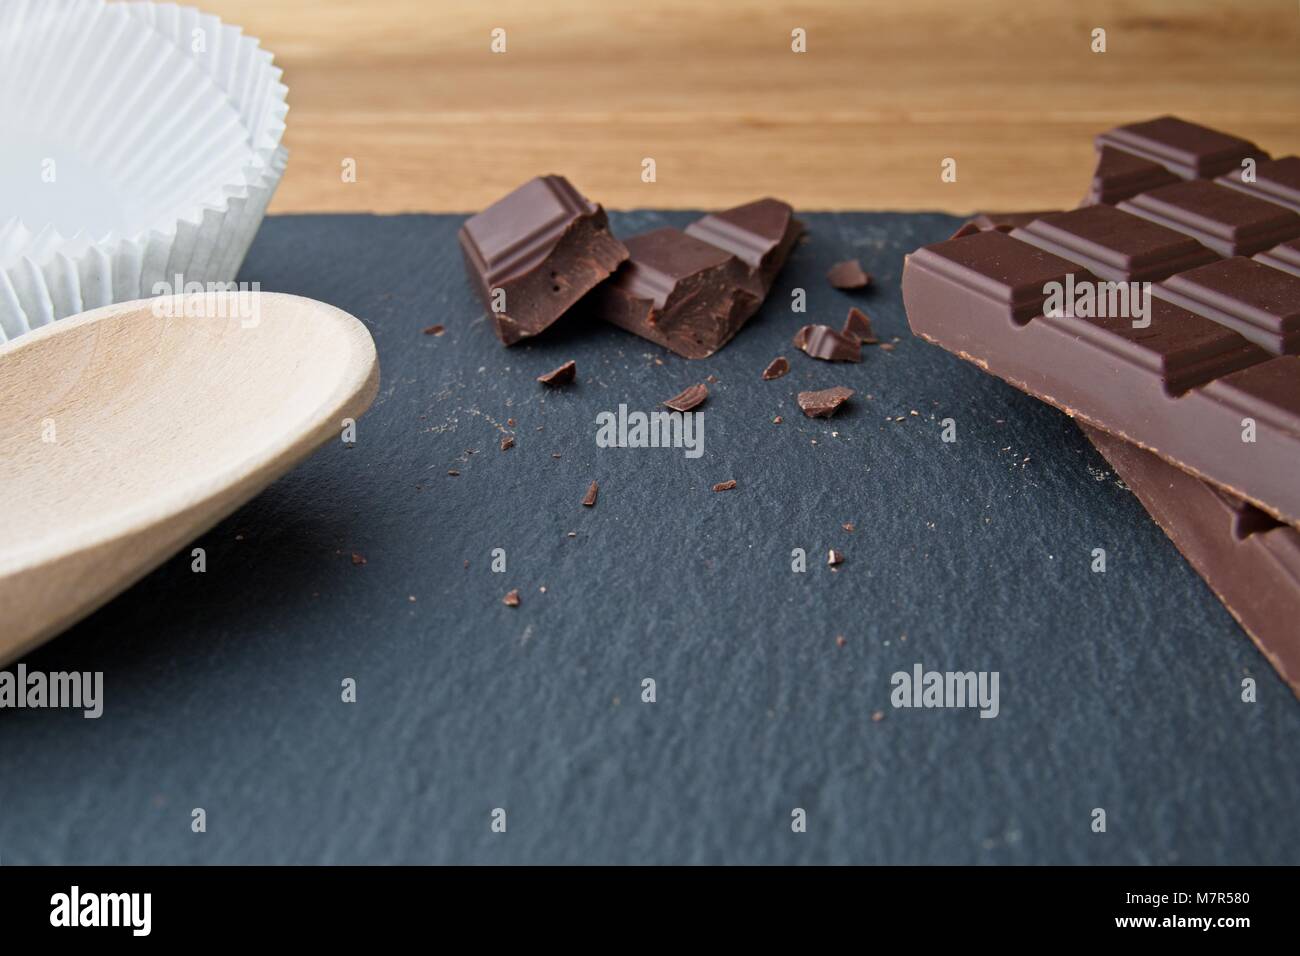 Broken plain chocolate with baking utensils on slate background Stock Photo